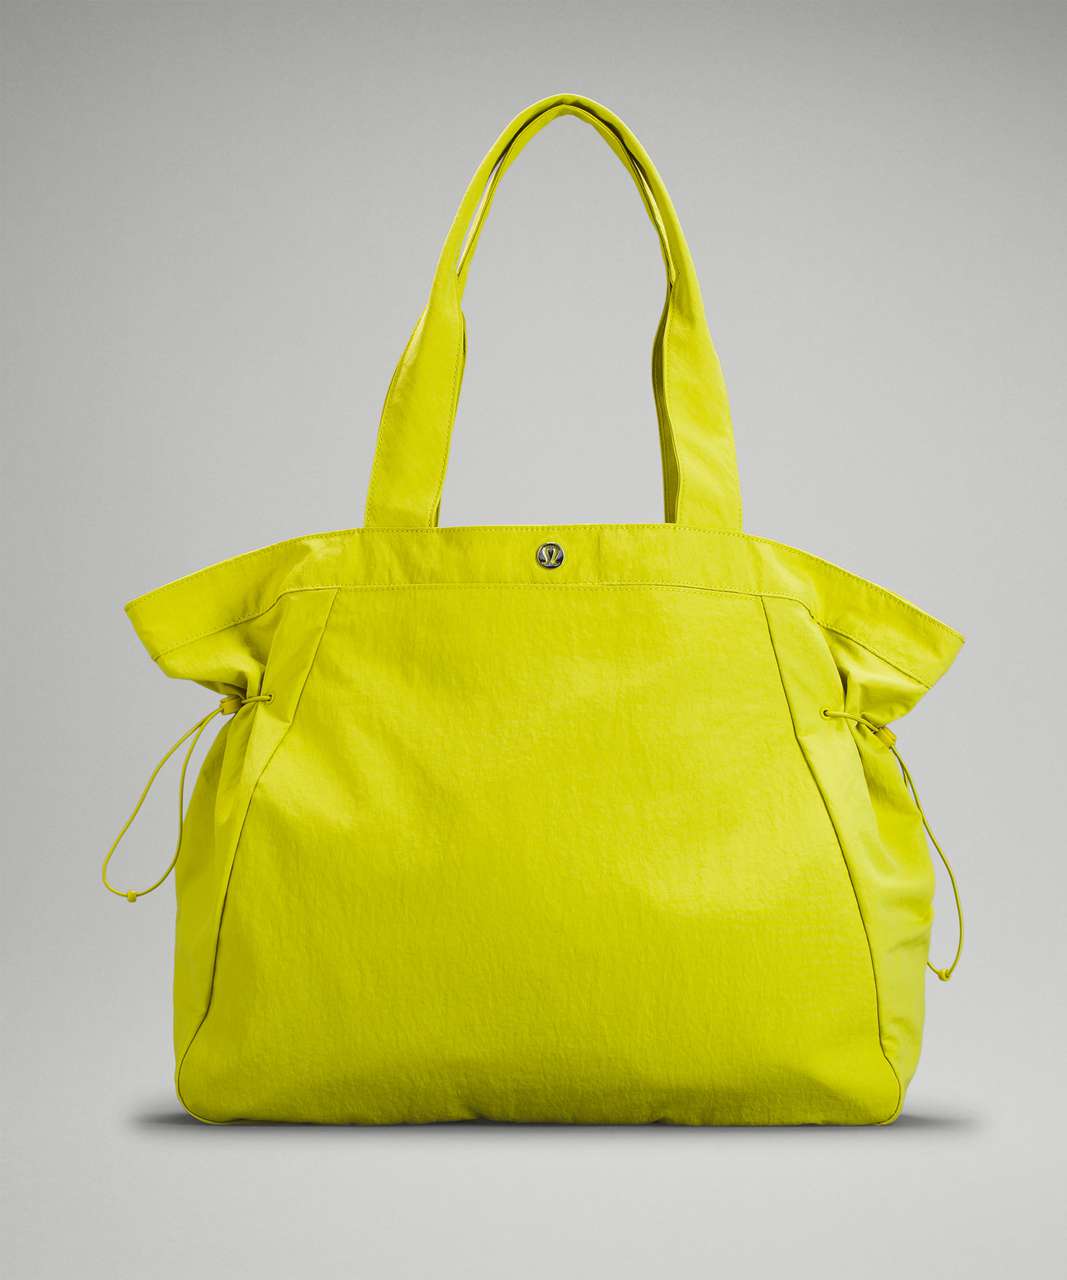 Lululemon Side-Cinch Shopper Bag *18L - Yellow Serpentine